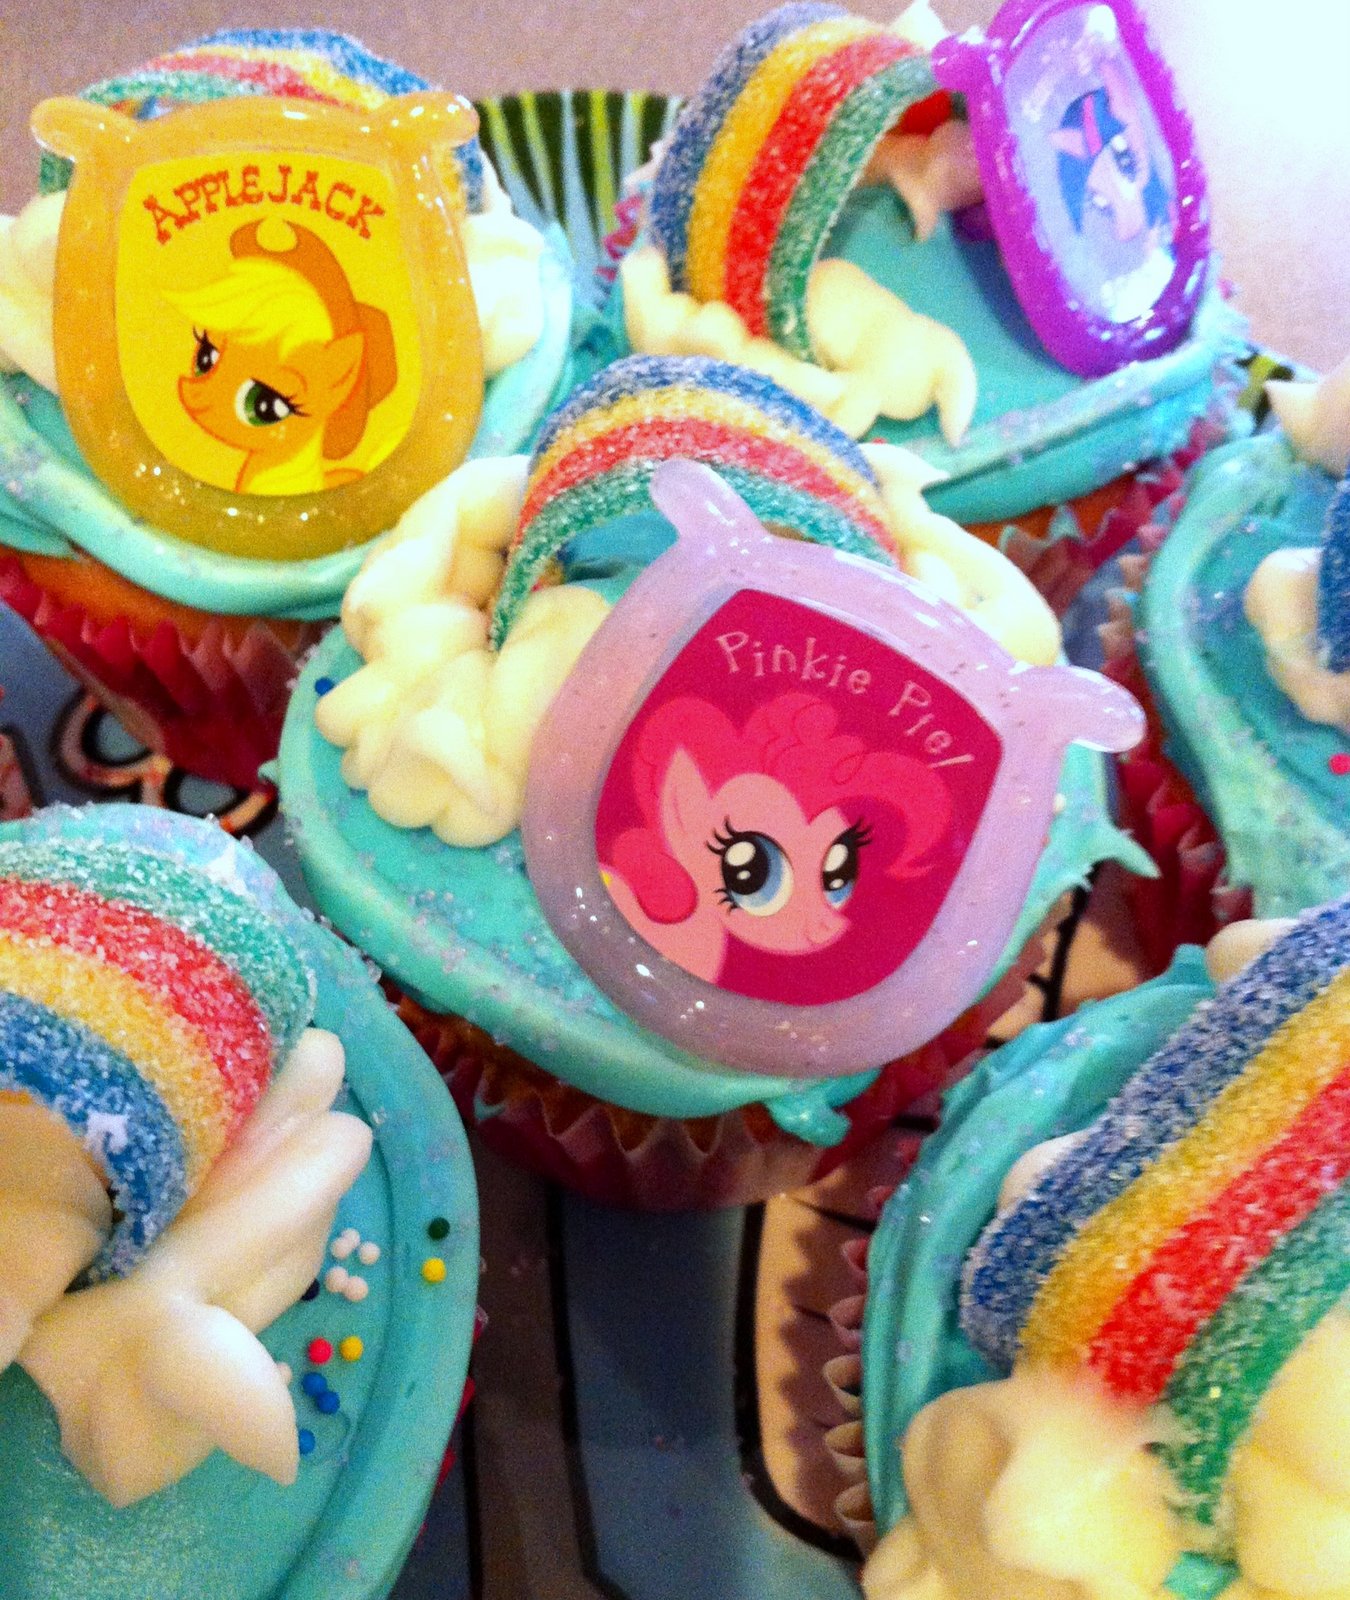 My Little Pony Rainbow Dash Cupcakes